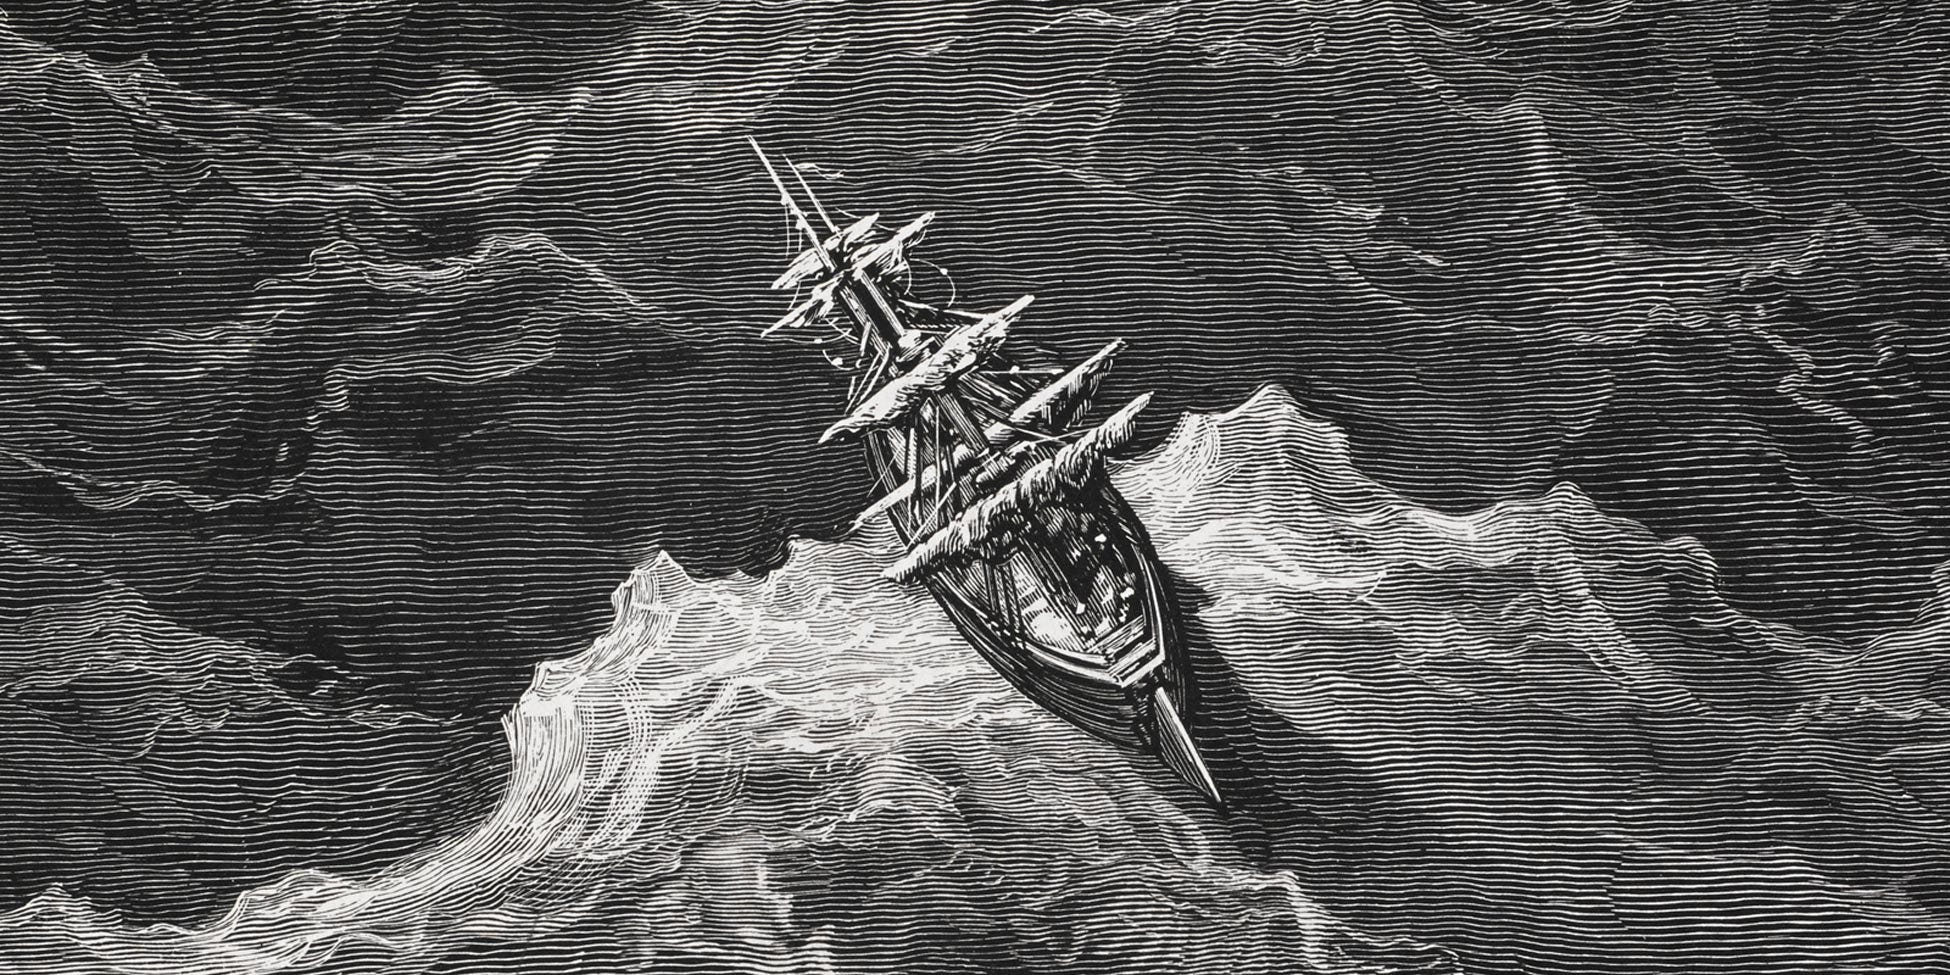 Image from Samuel Coleridge's Rime of the Ancient Mariner. Coleridge essentially invented writer's block.